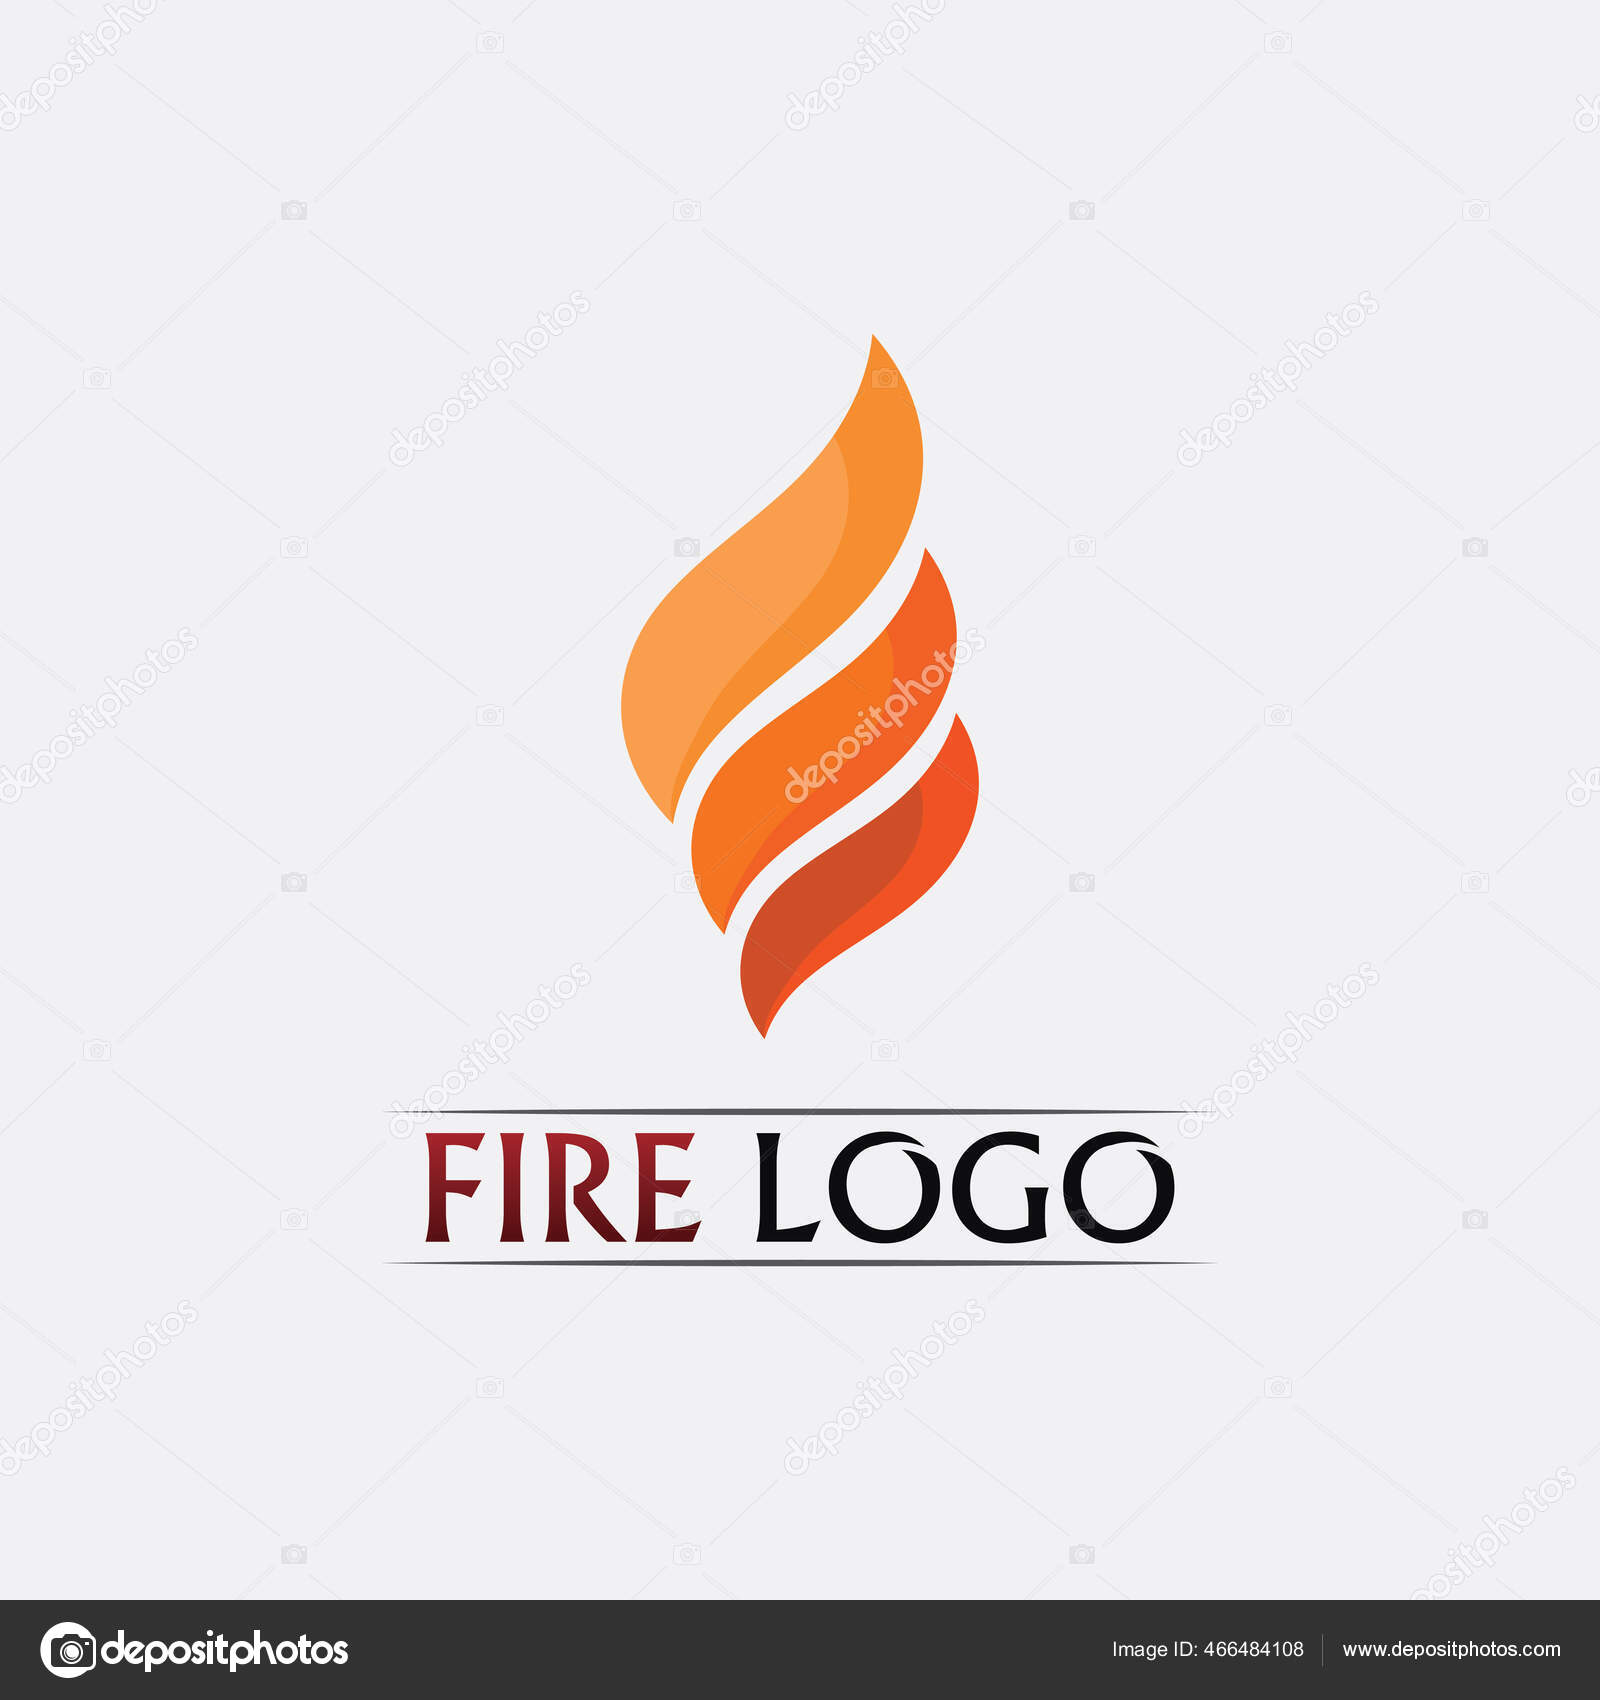 Design De Logotipo De Fogo, Vetor Gráfico De Fogo, Logotipo De Chama.  Royalty Free SVG, Cliparts, Vetores, e Ilustrações Stock. Image 115437910